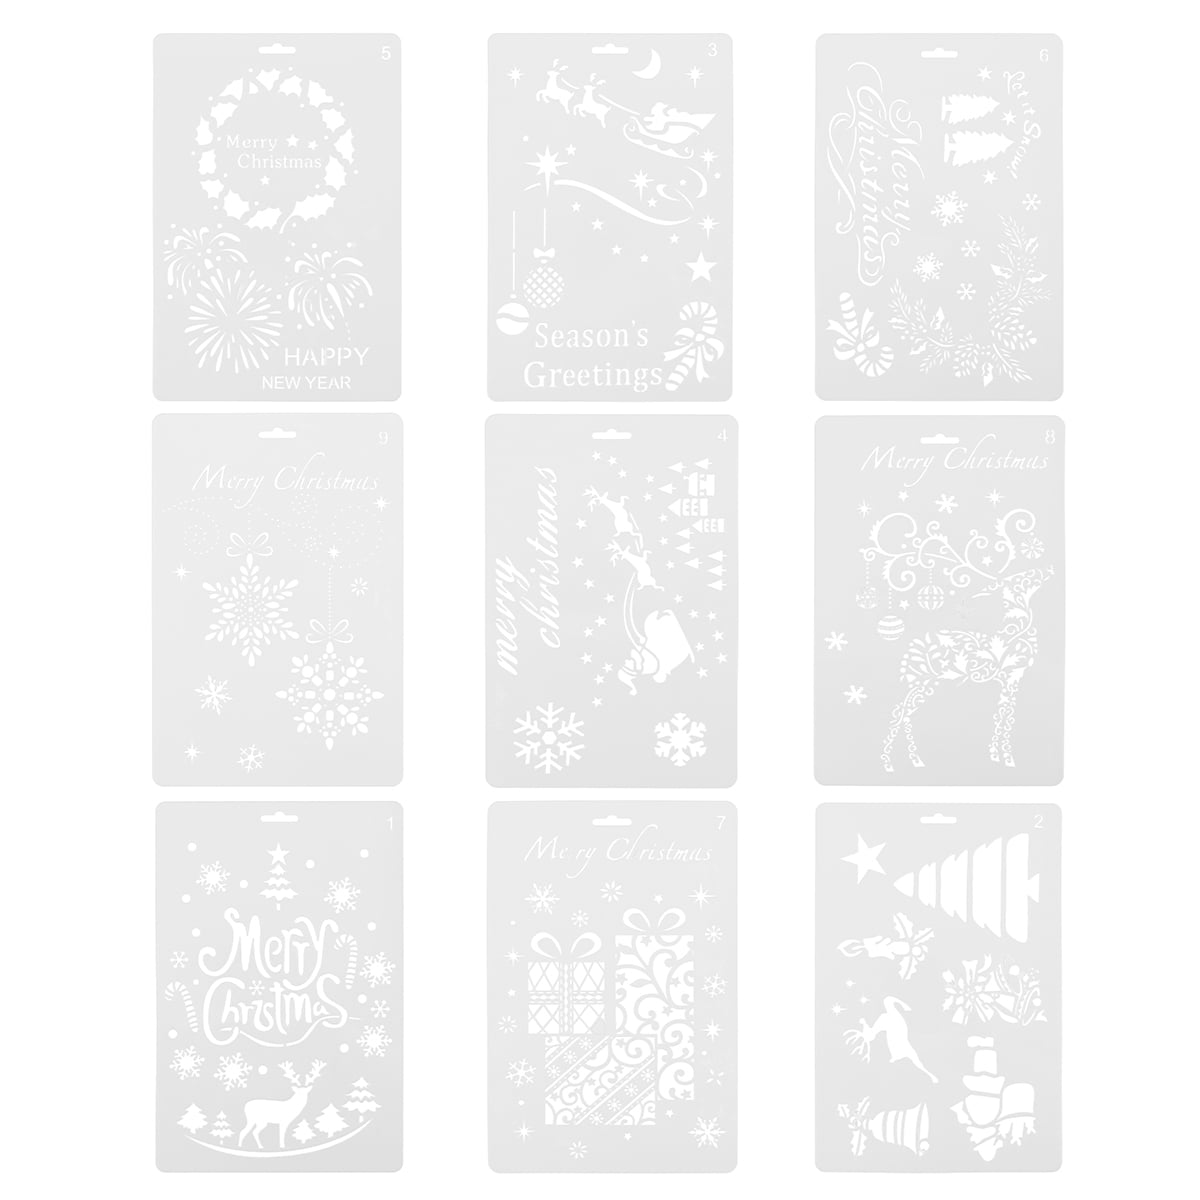 qucoqpe 7 Pieces Christmas Drawing Stencils Christmas Theme